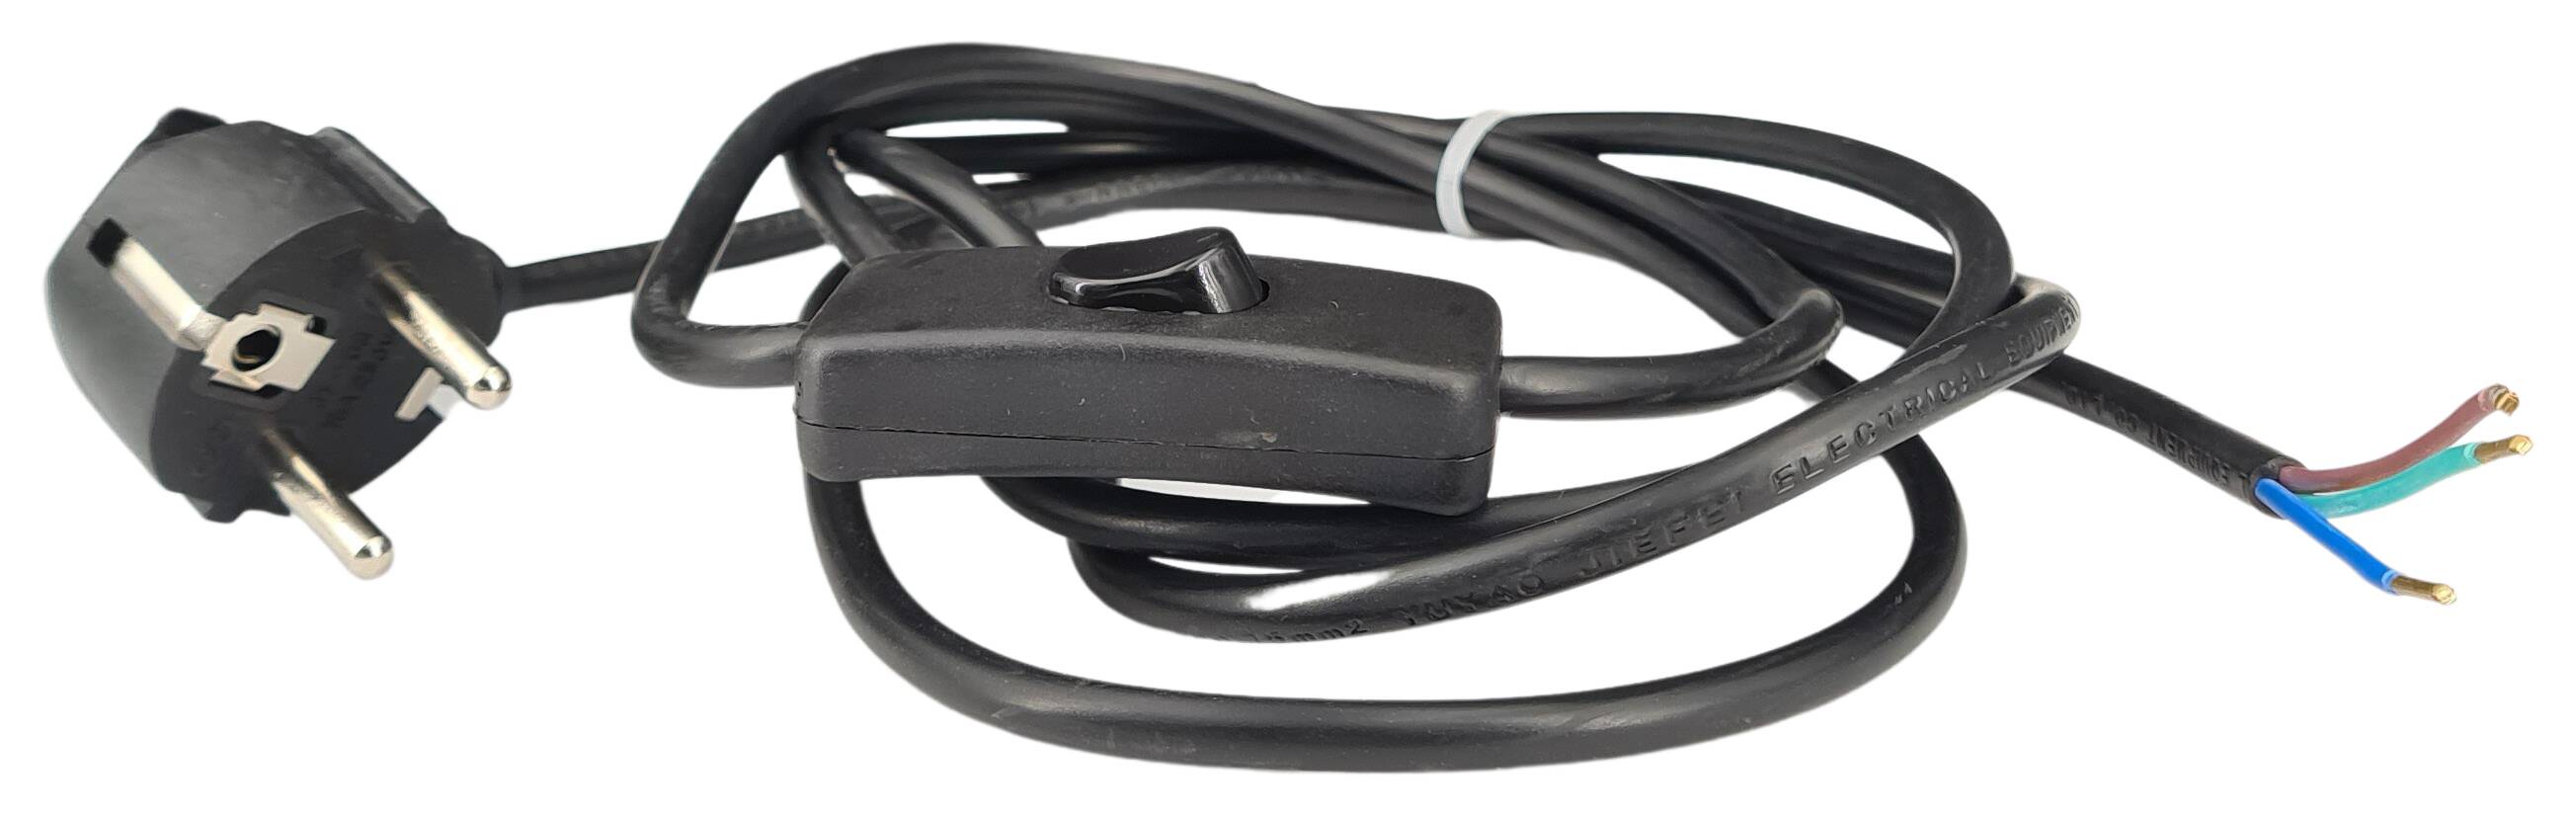 cord-set 3G 0,75/1500/500 with schuko angled plug and handswitch black